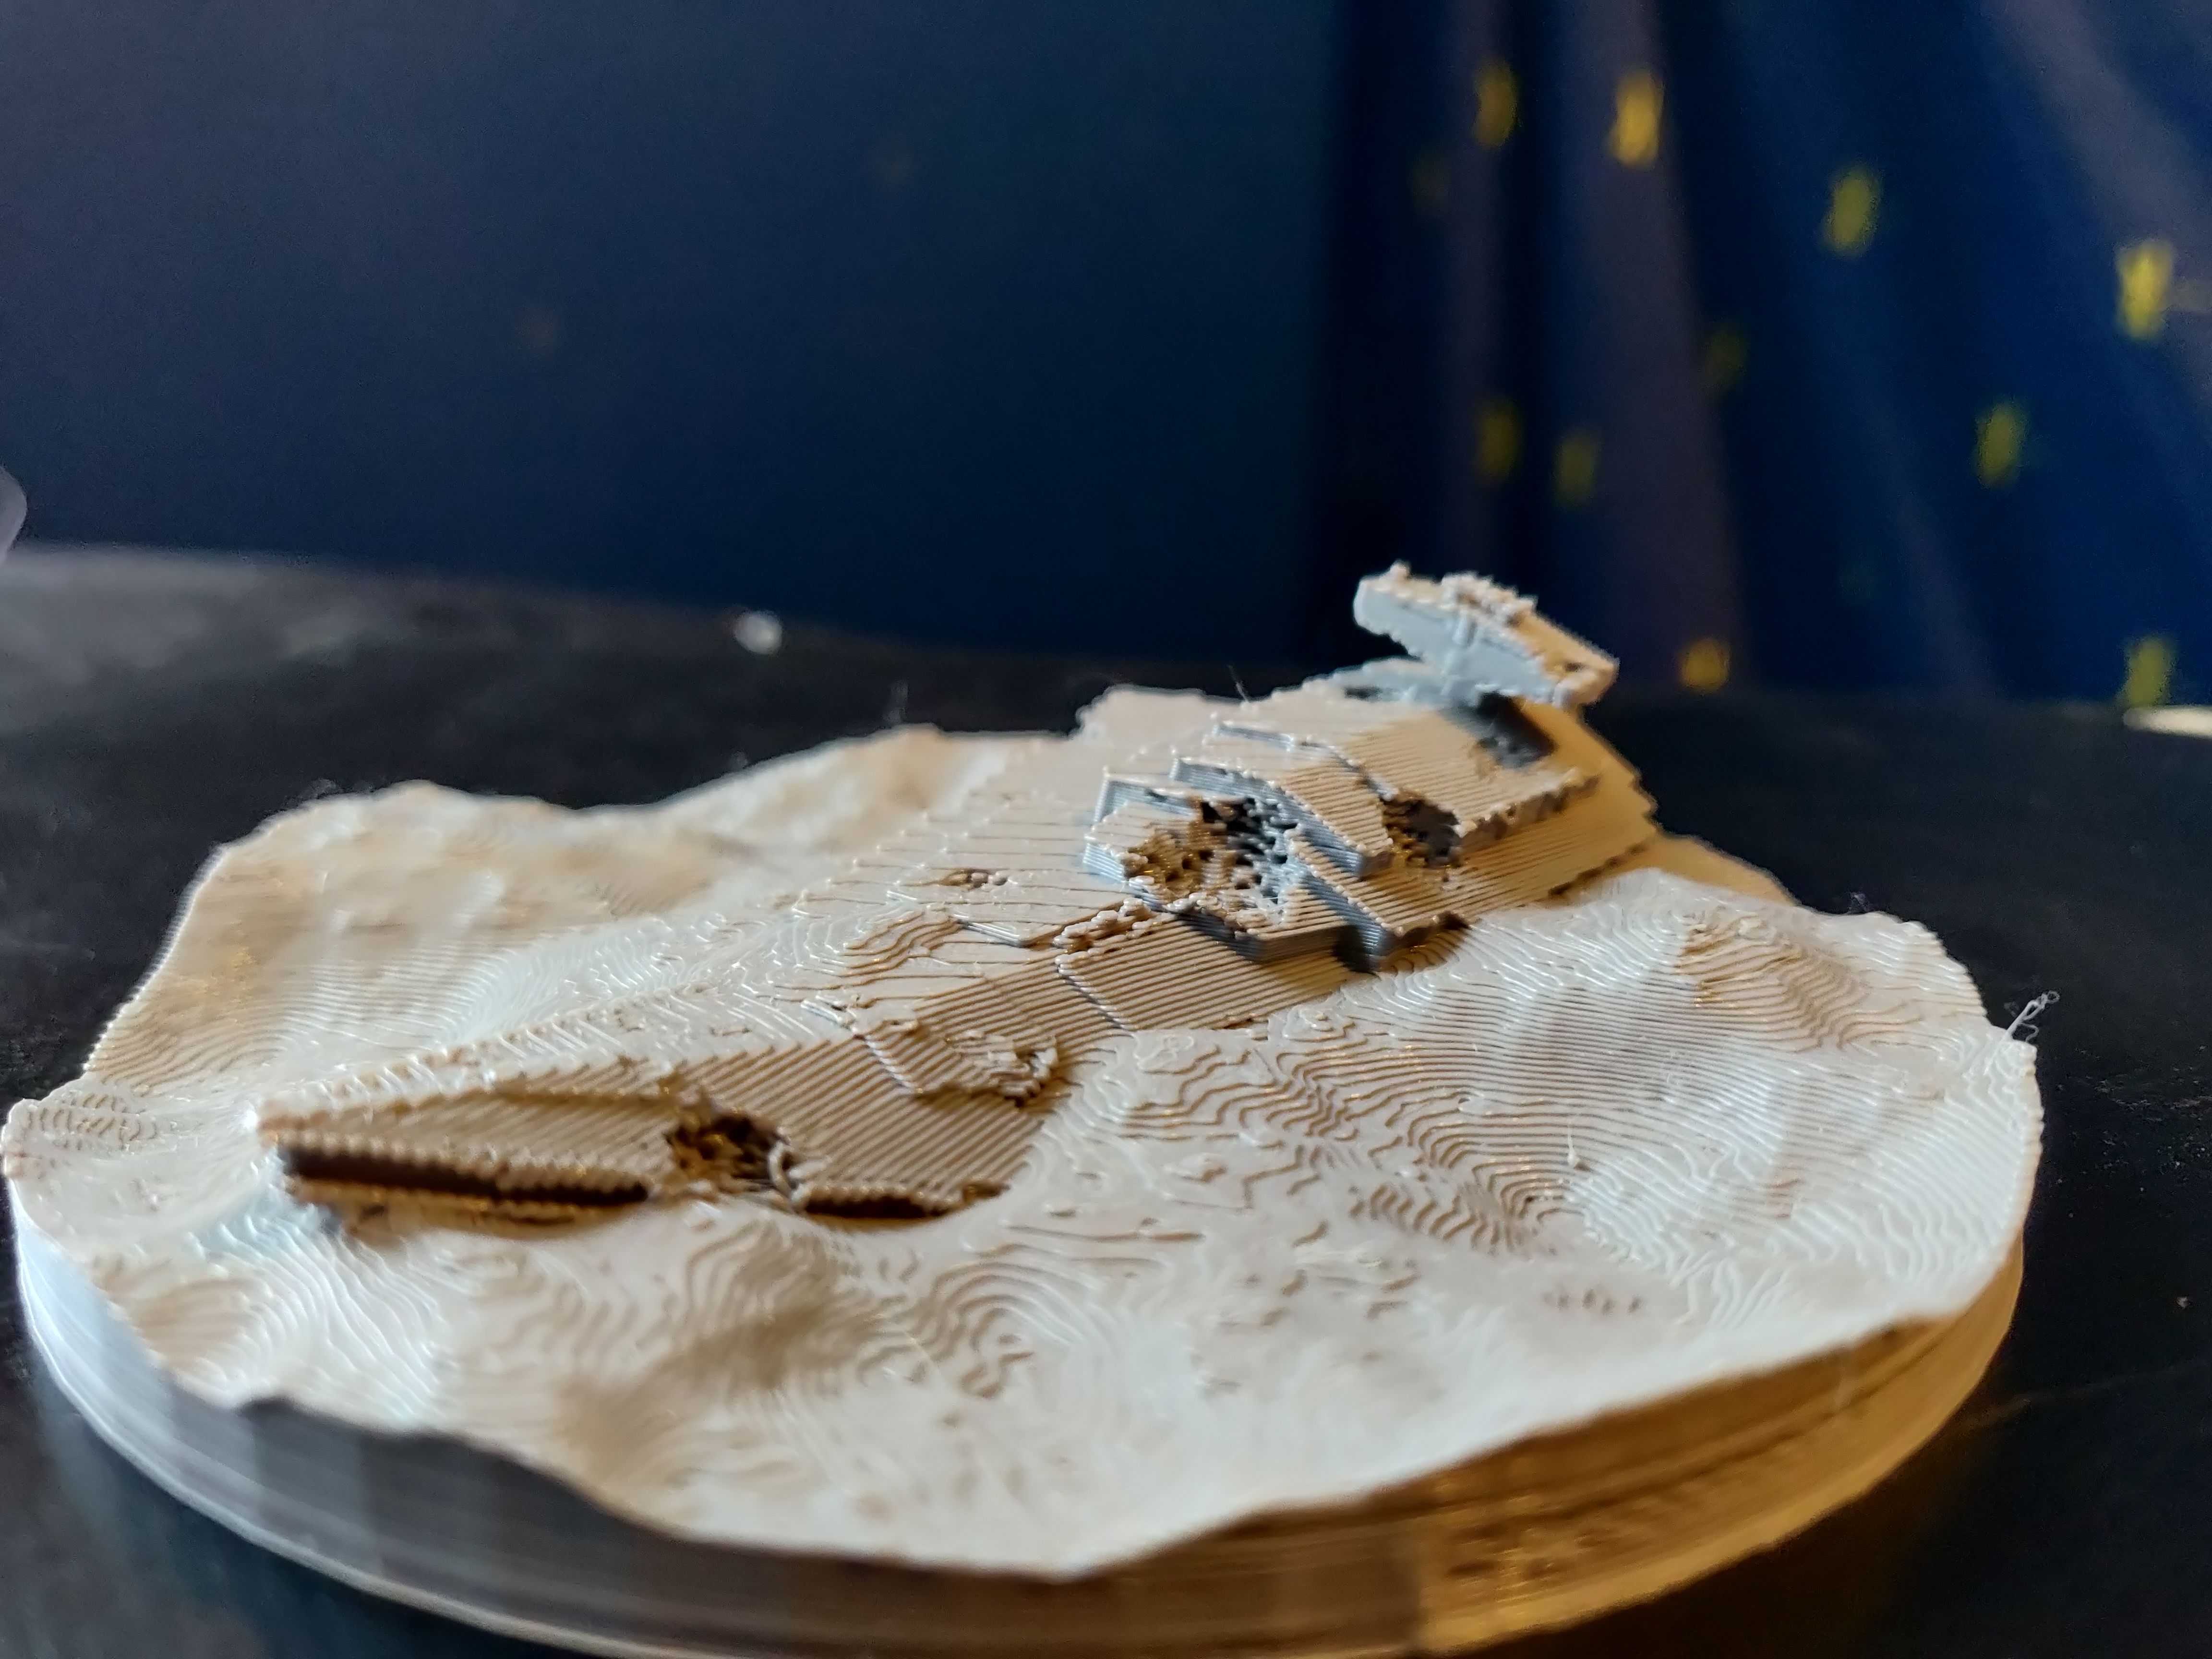 Crashed Imperial Star Destroyer Diorama